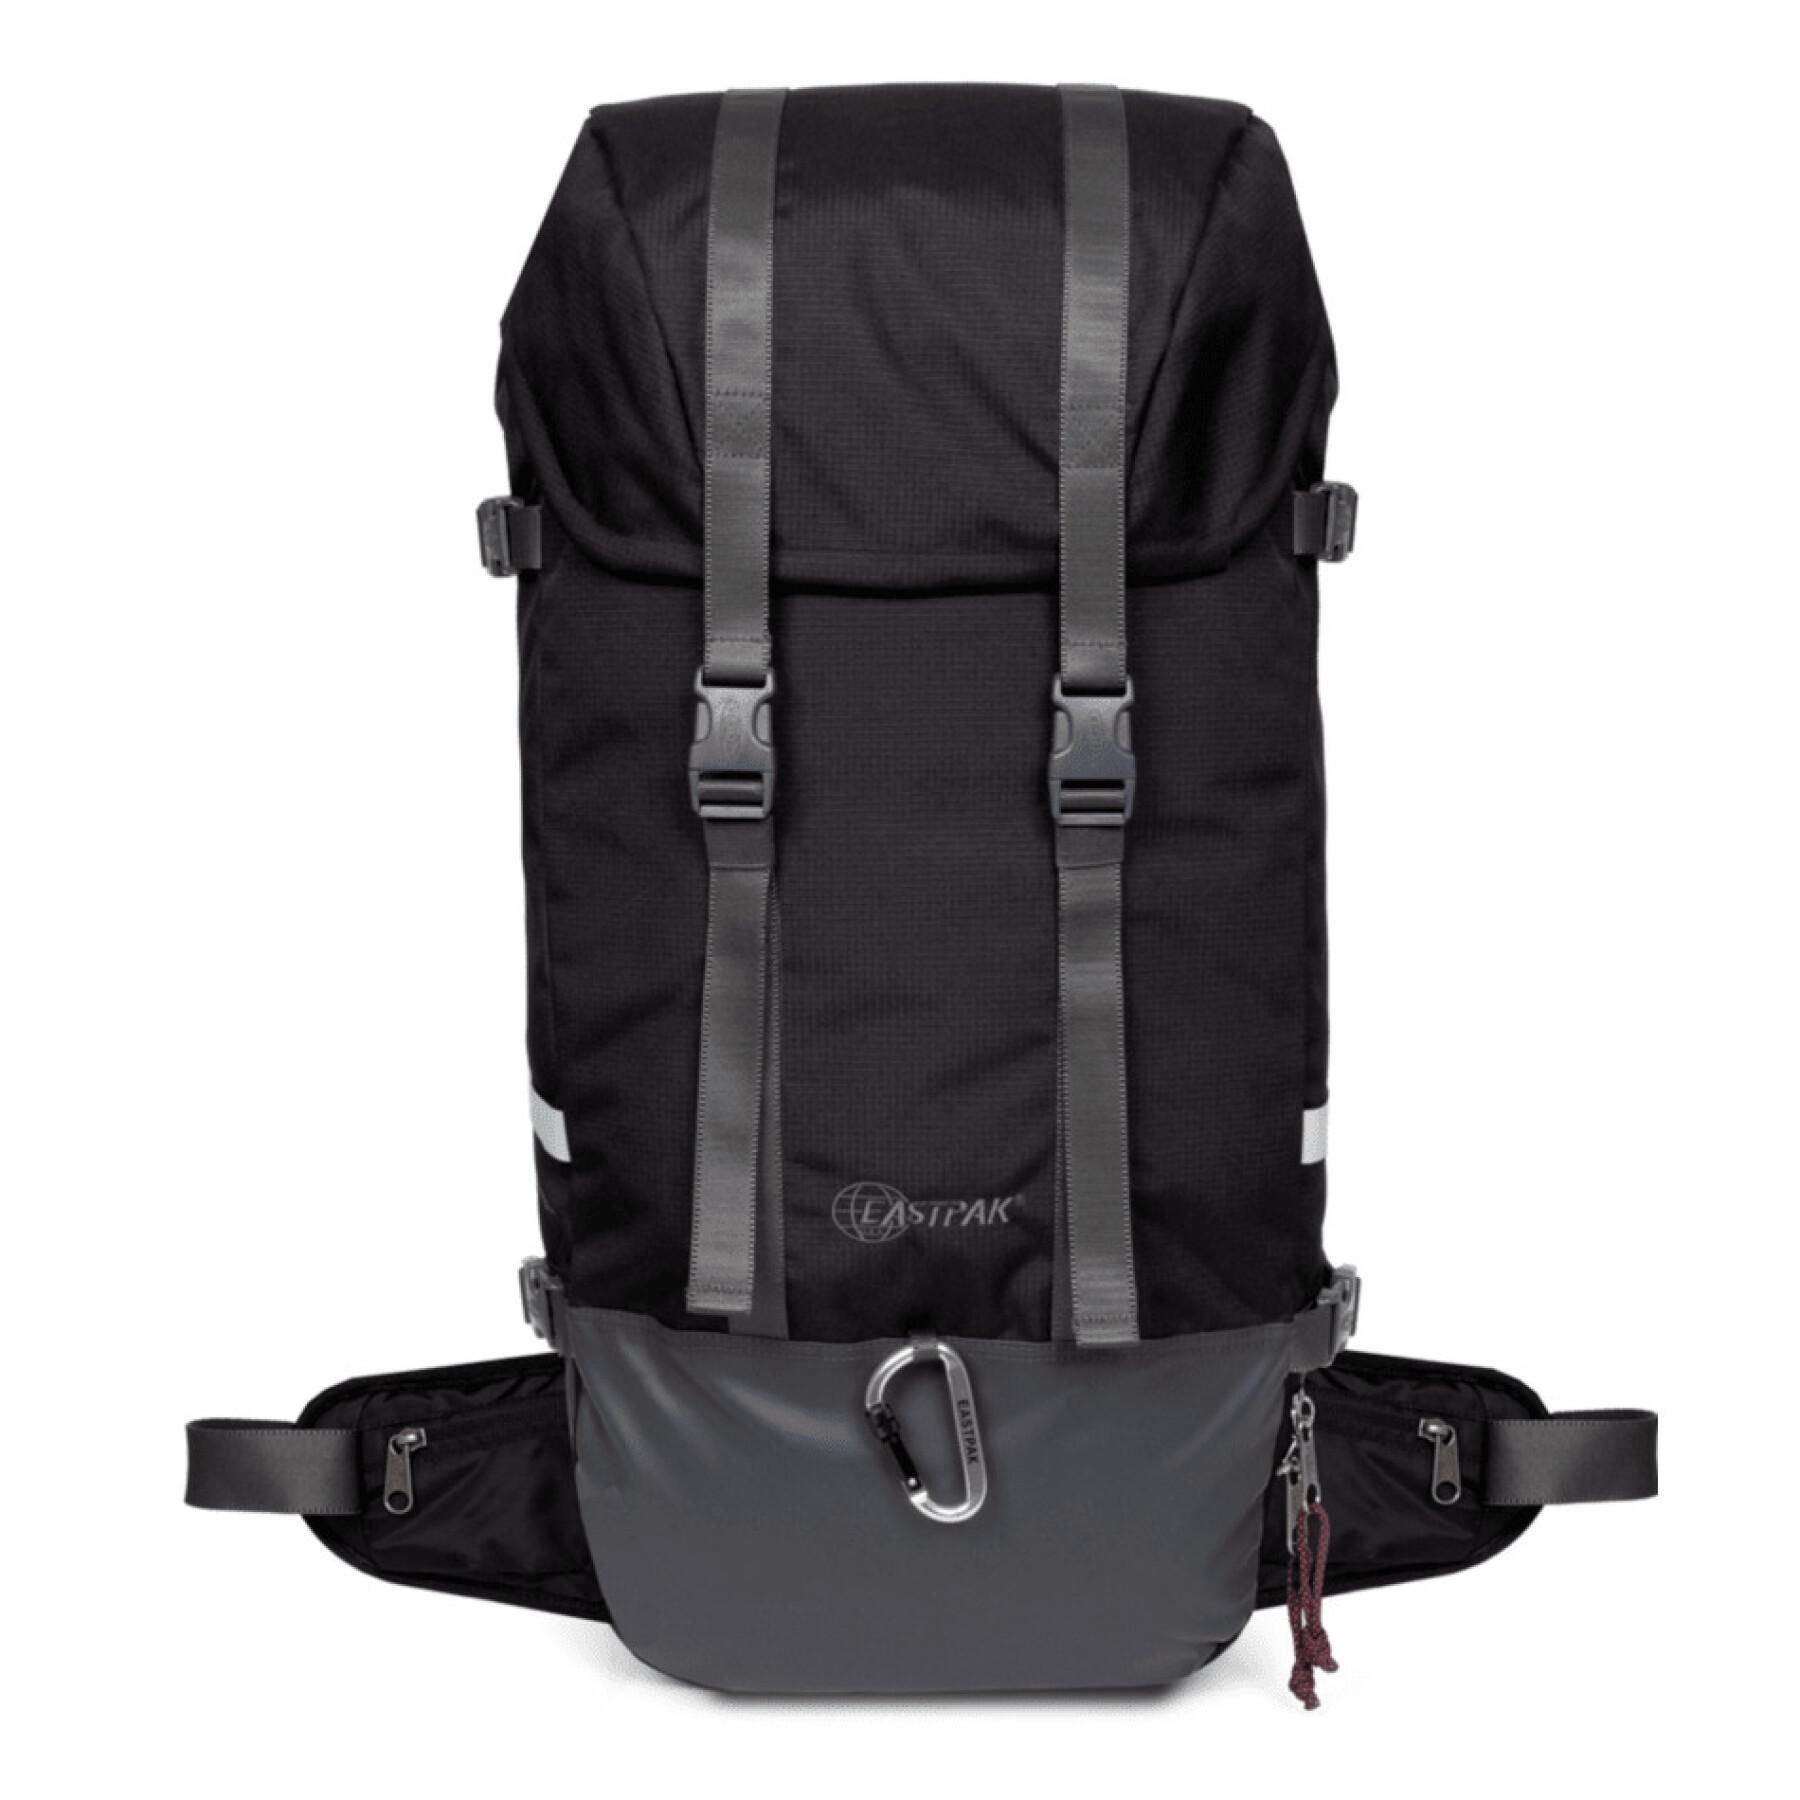 Plecak Eastpak Out Safepack